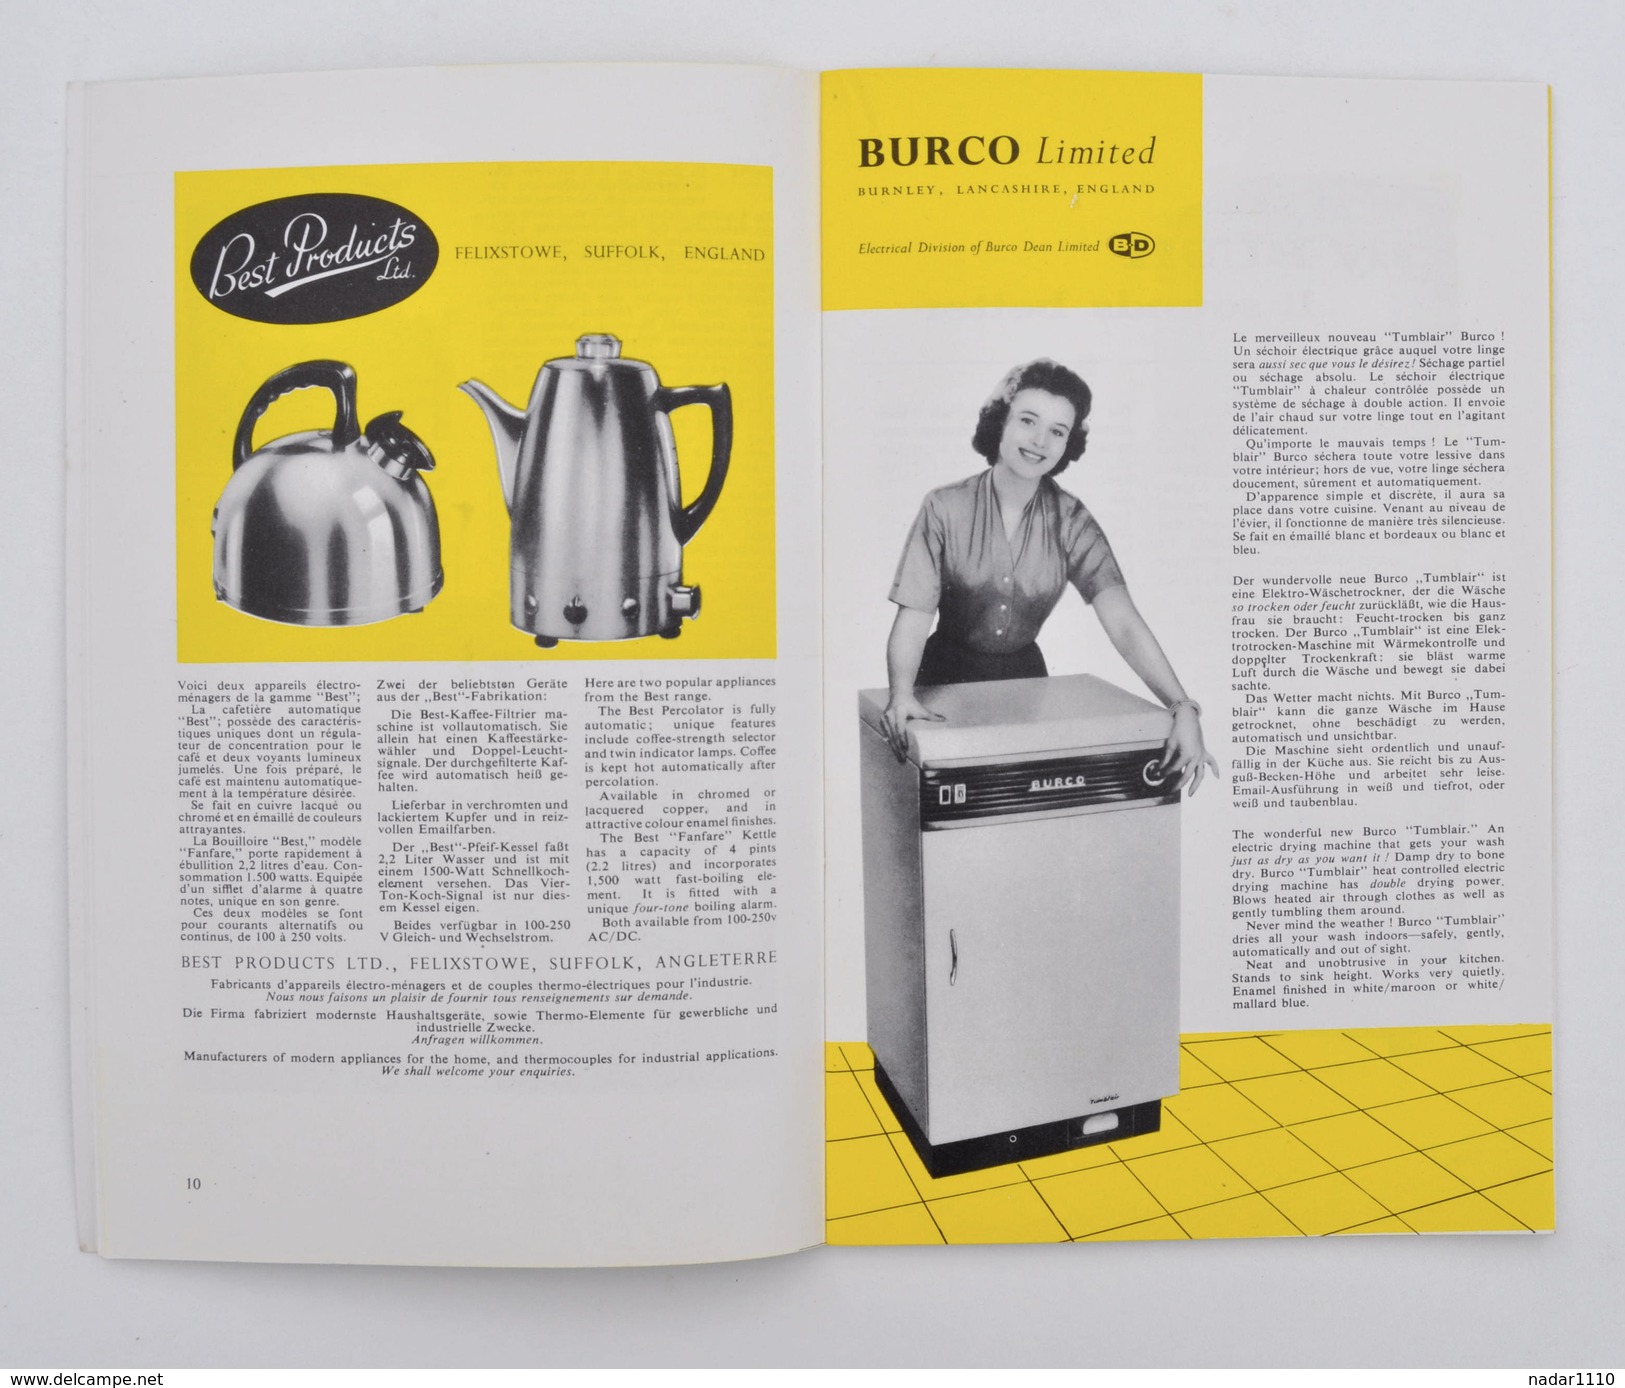 Art ménager / EXPO BRUXELLES 1958 : Electricité à la Maison (Electricty in the Home, LONDON) / Hoover, Kenwood, Cossor